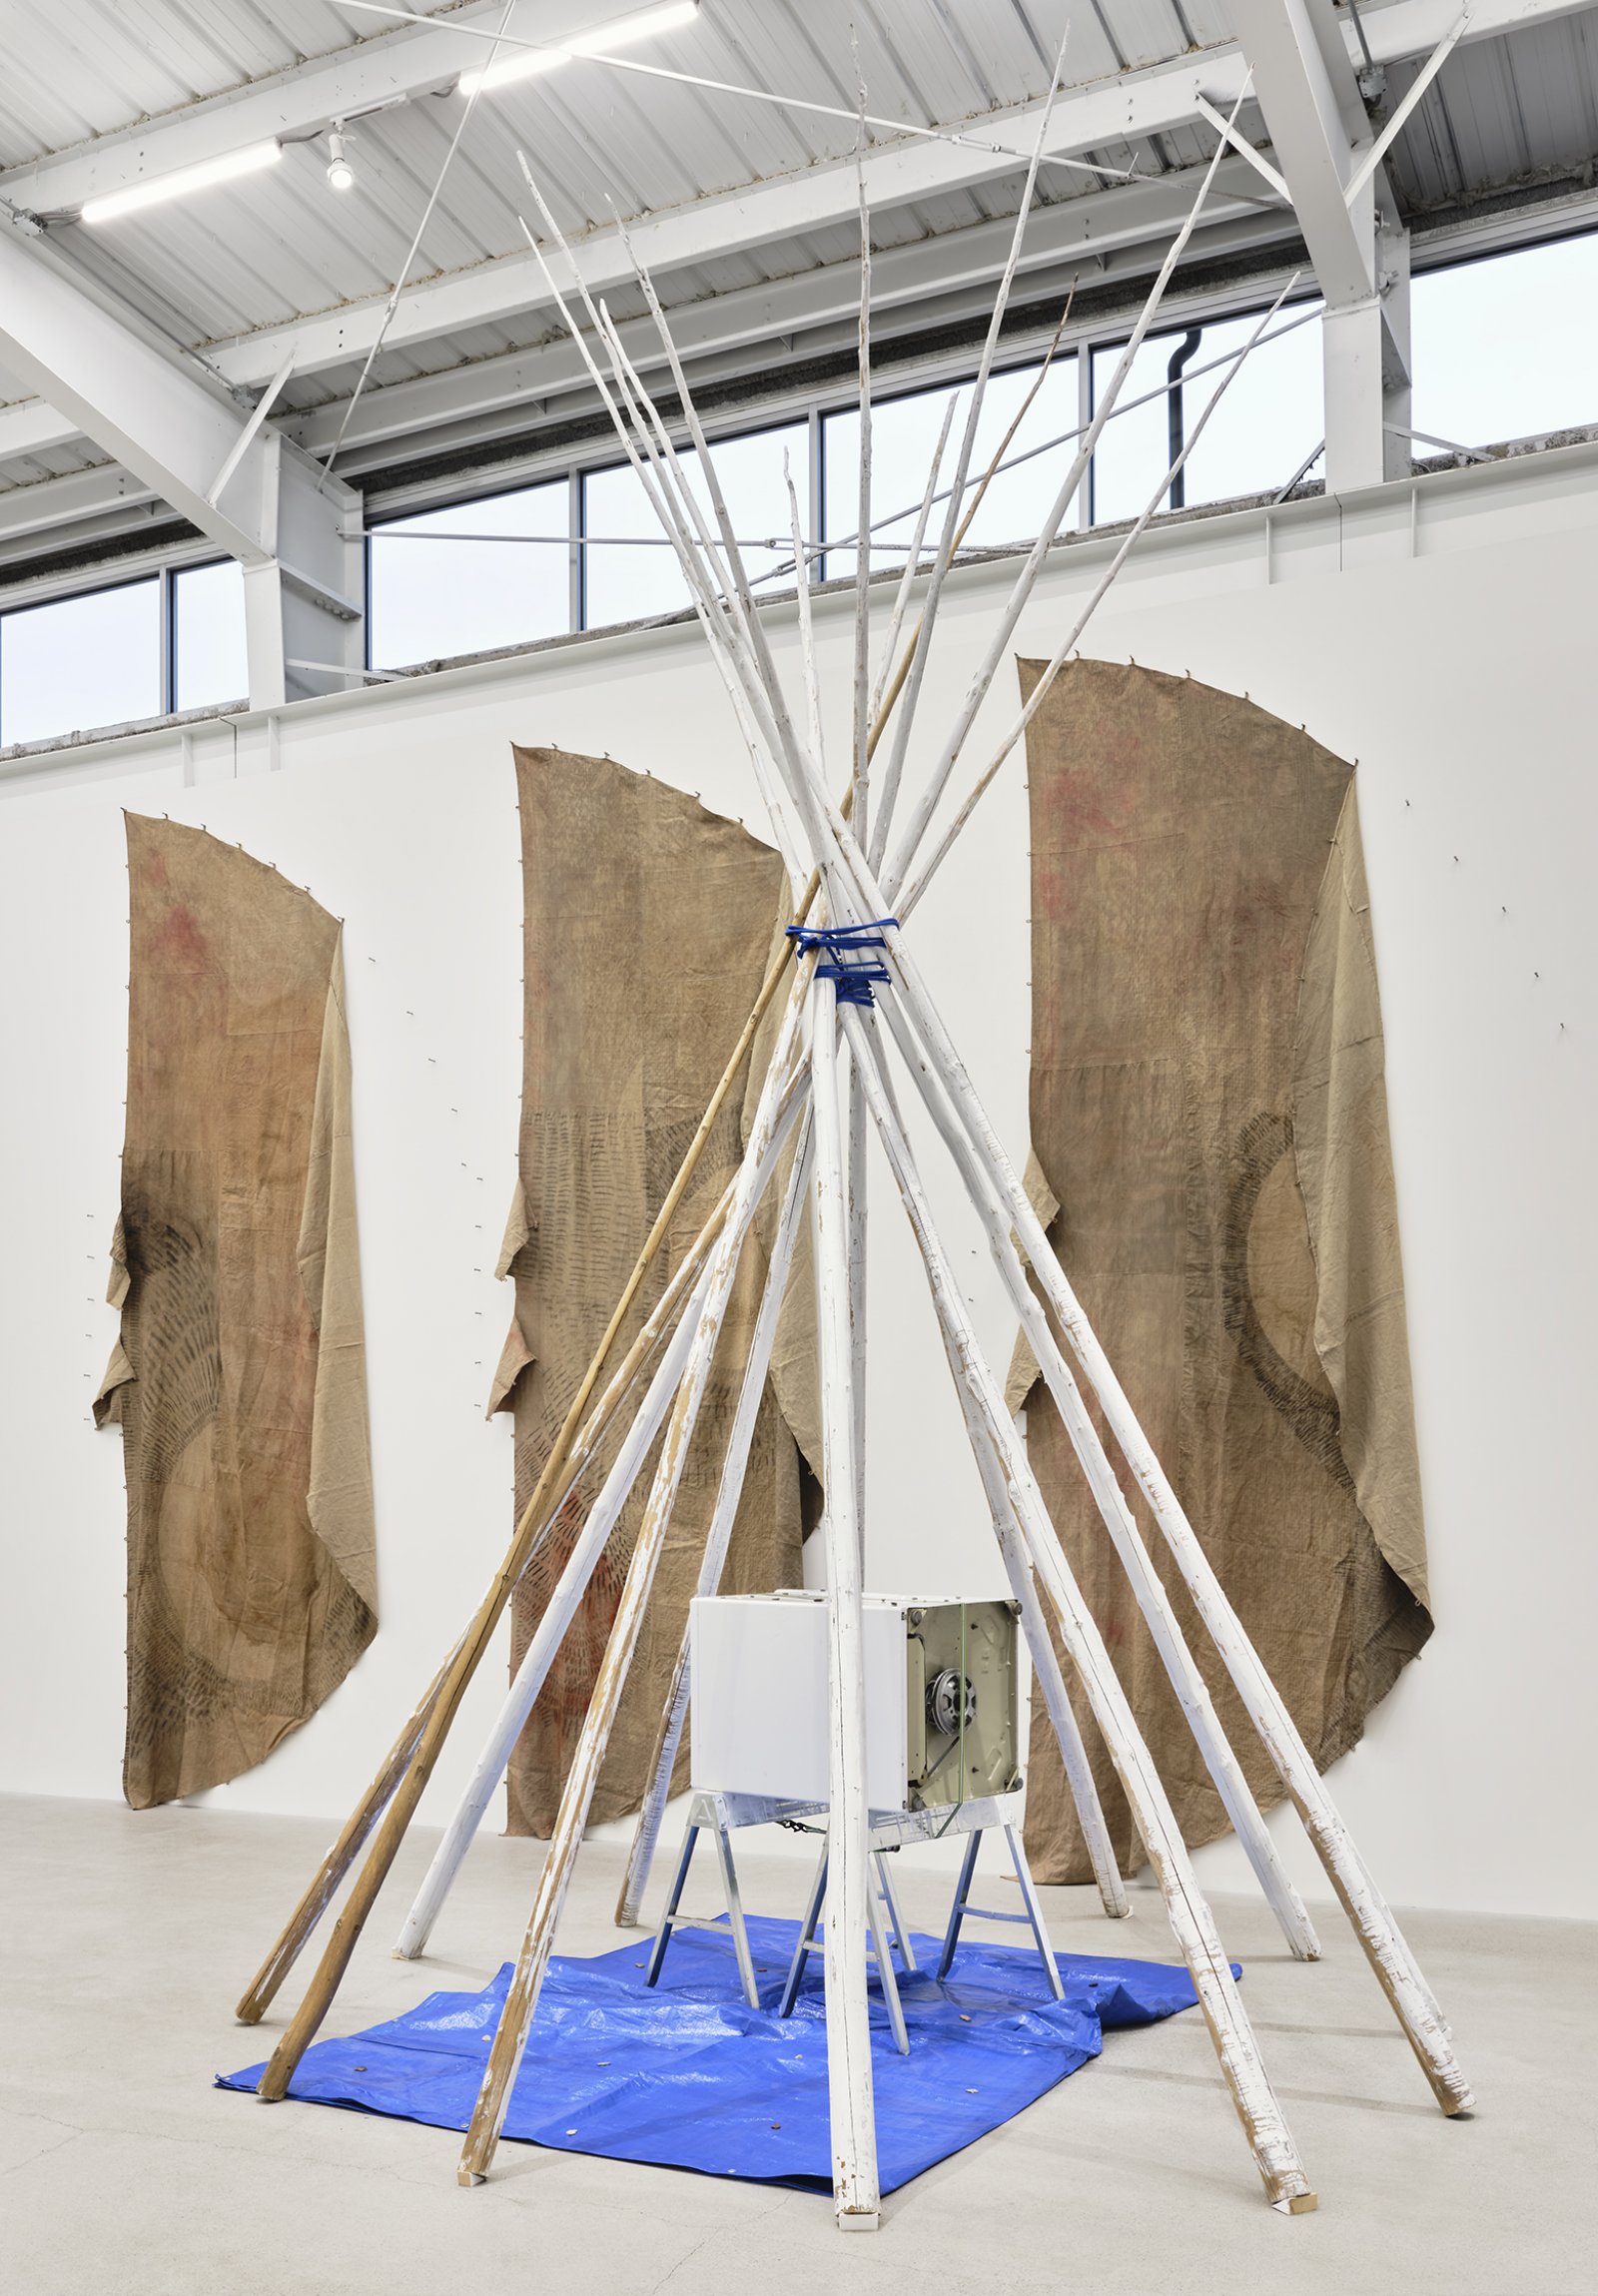 Duane Linklater, anteclovis, 2020, teepee poles, paint, nylon rope, tarpaulin, steel sawhorses, washing machine, tie-down strap, arrowheads, 230 x 158 x 158 in. (584 x 401 x 401 cm)